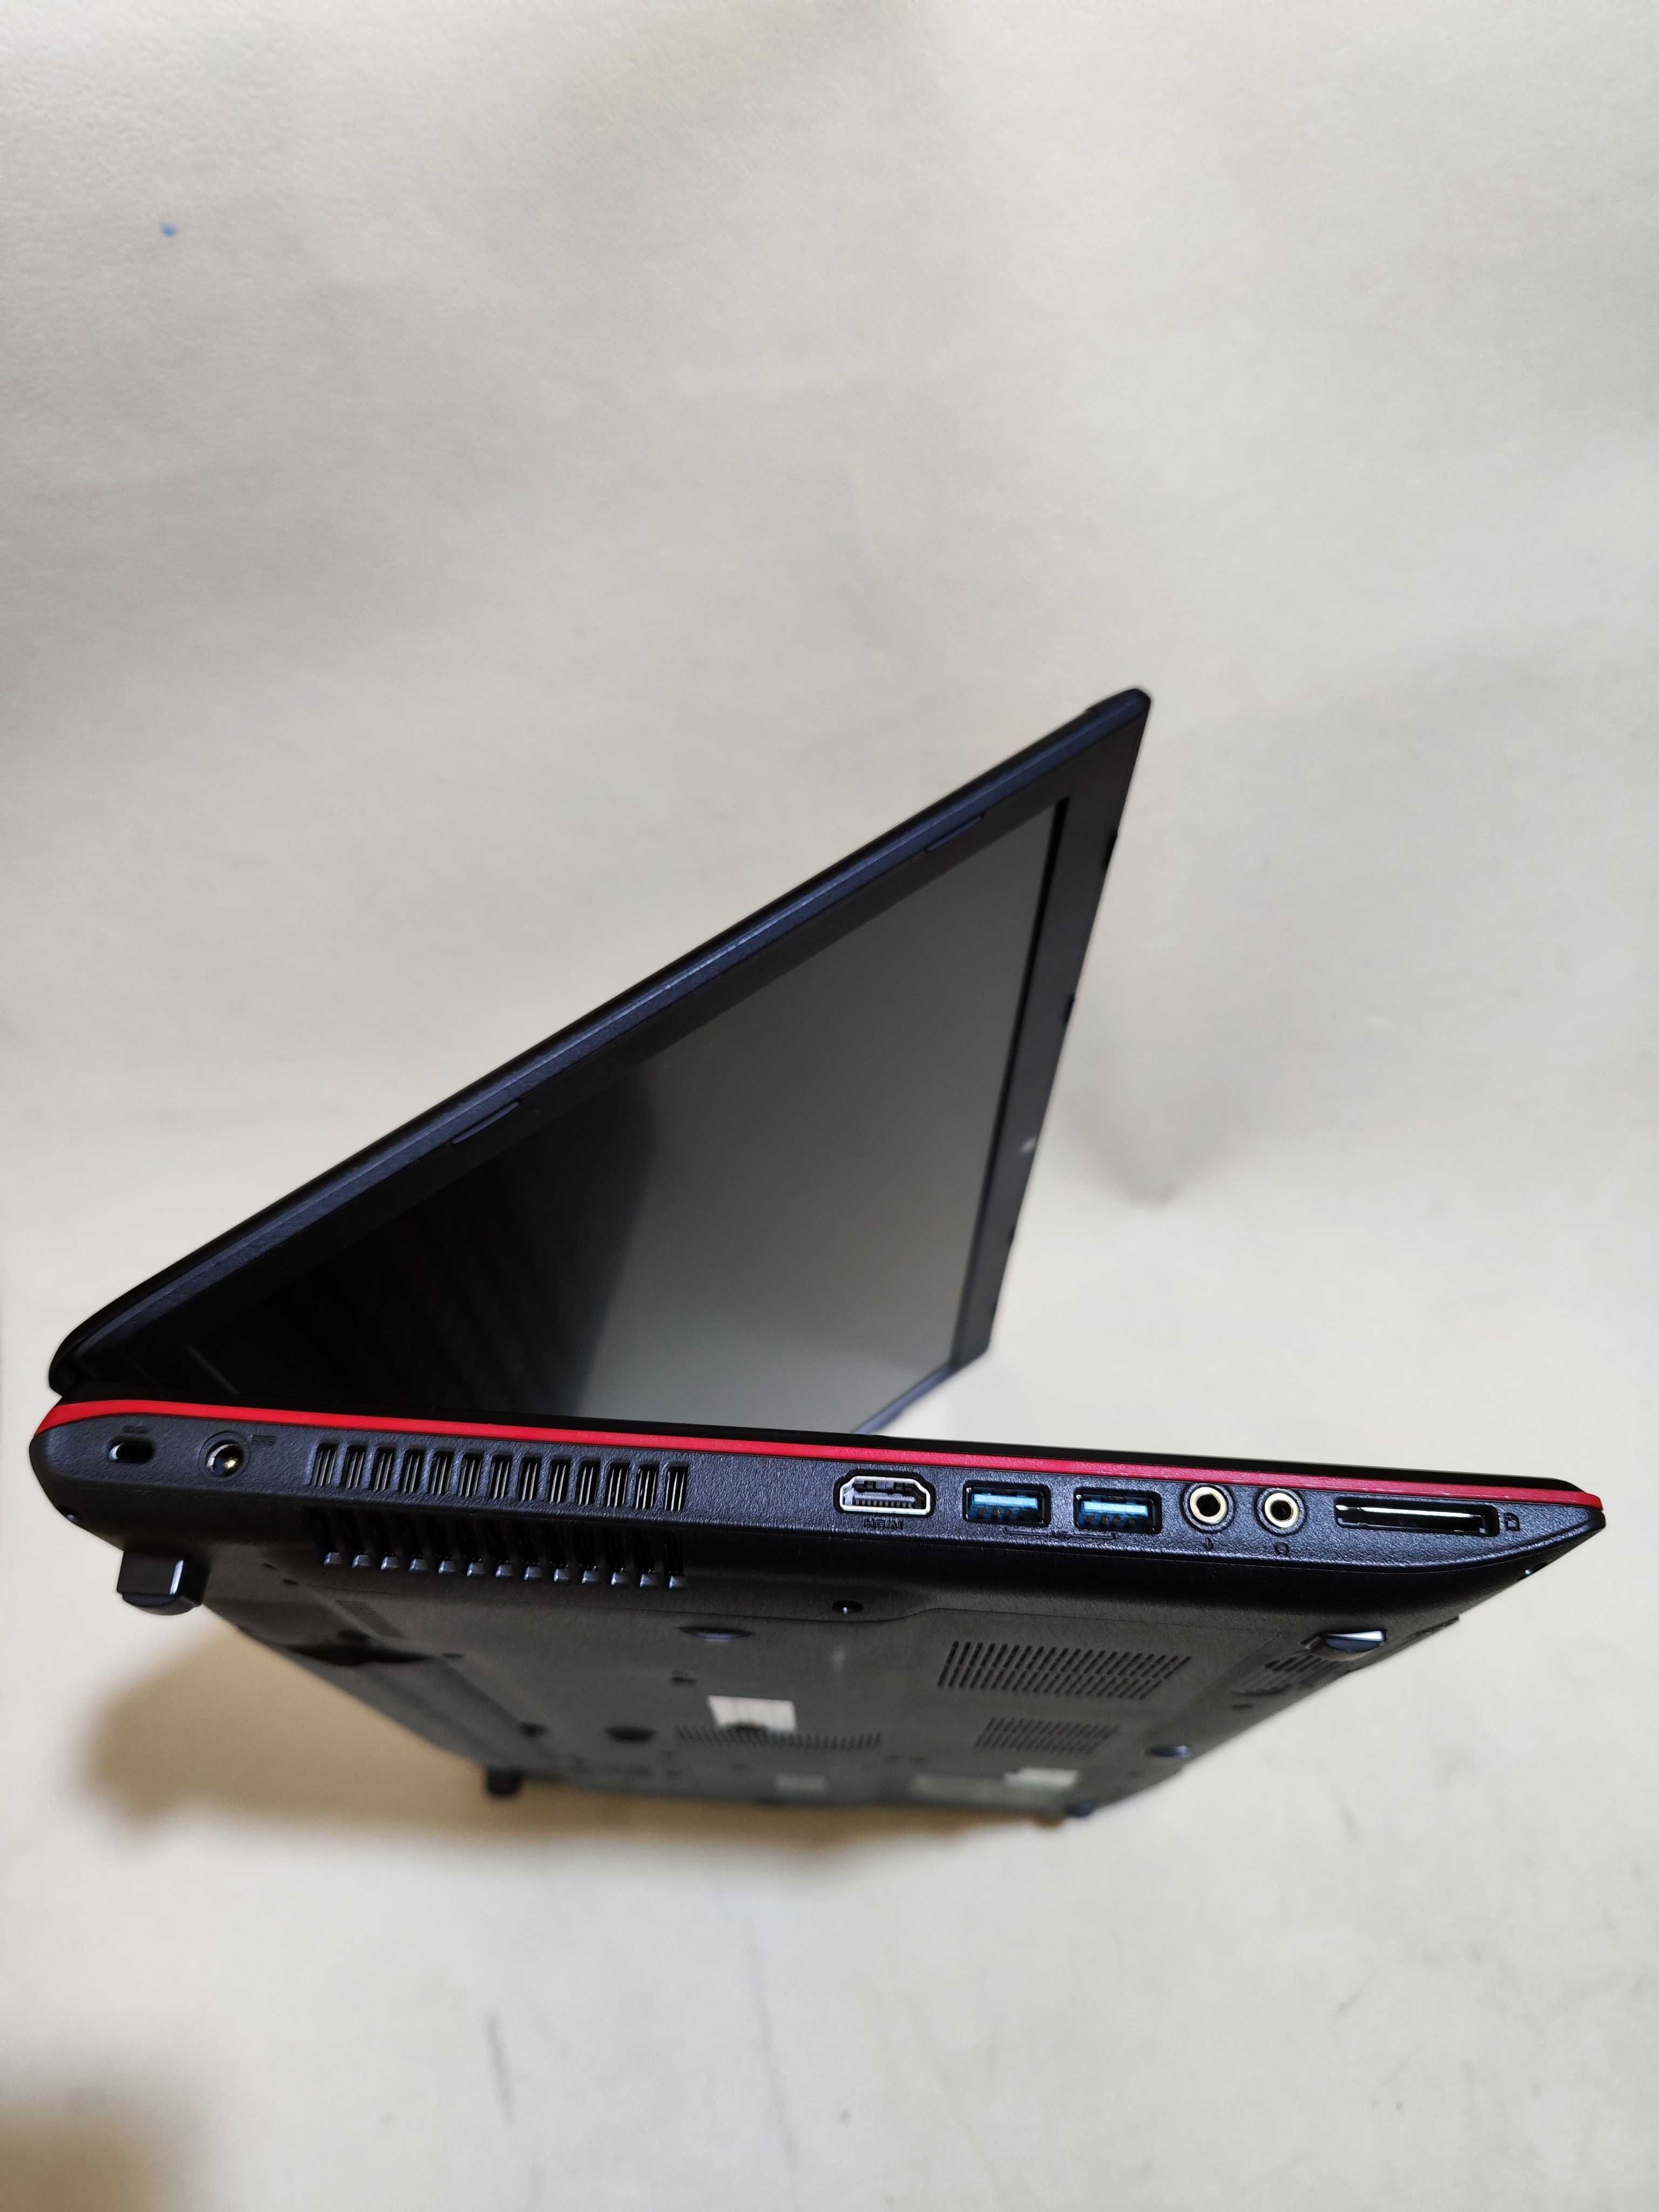 Игровой ноутбук MSI GE70 2QE APACHE PRO 17.3" i7/16Gb/SSD+HDD/GTX 960M